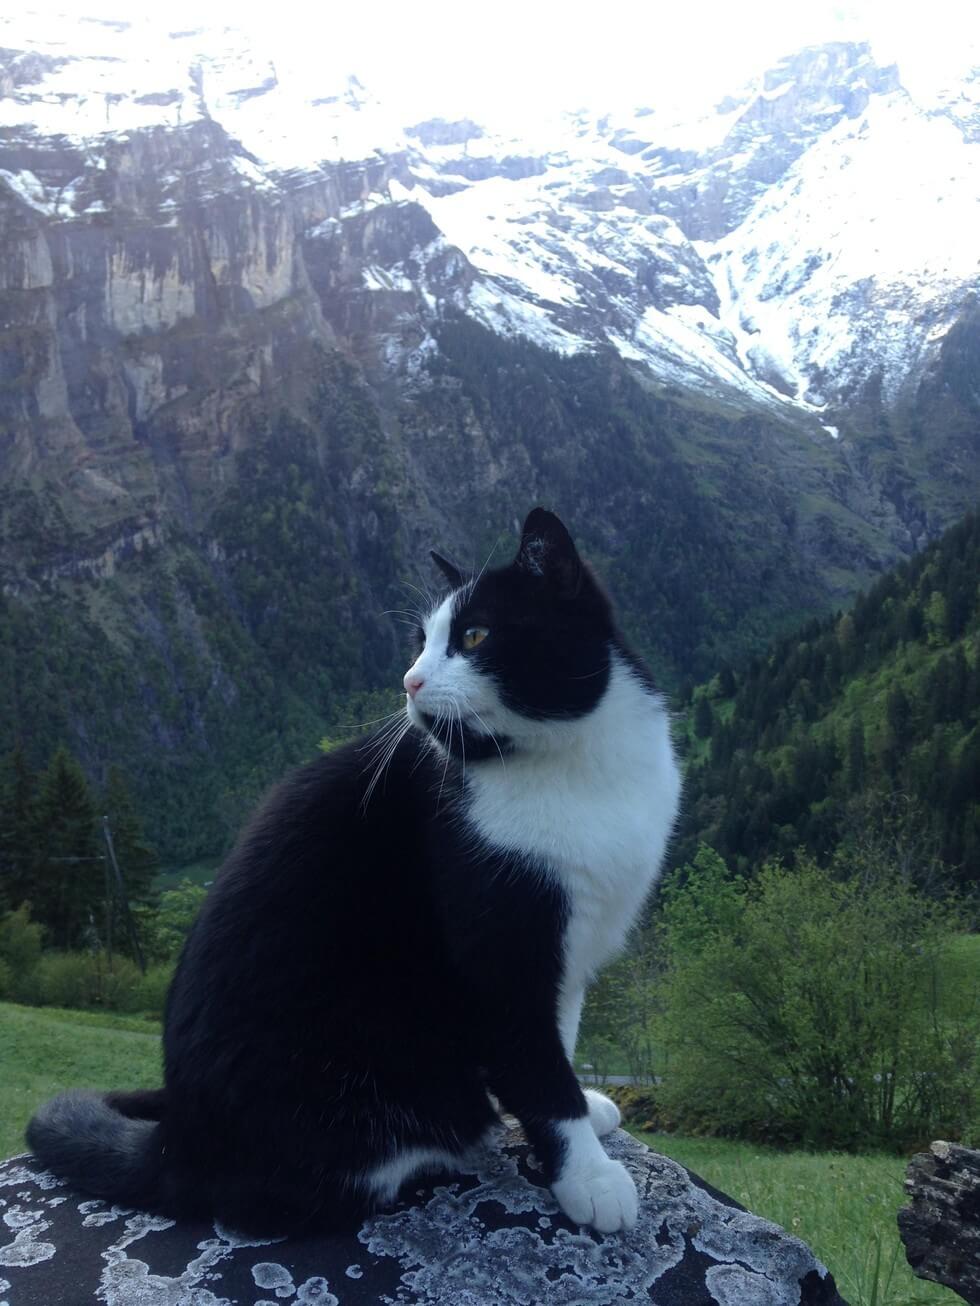 cat guides man down a mountain 4 (1)